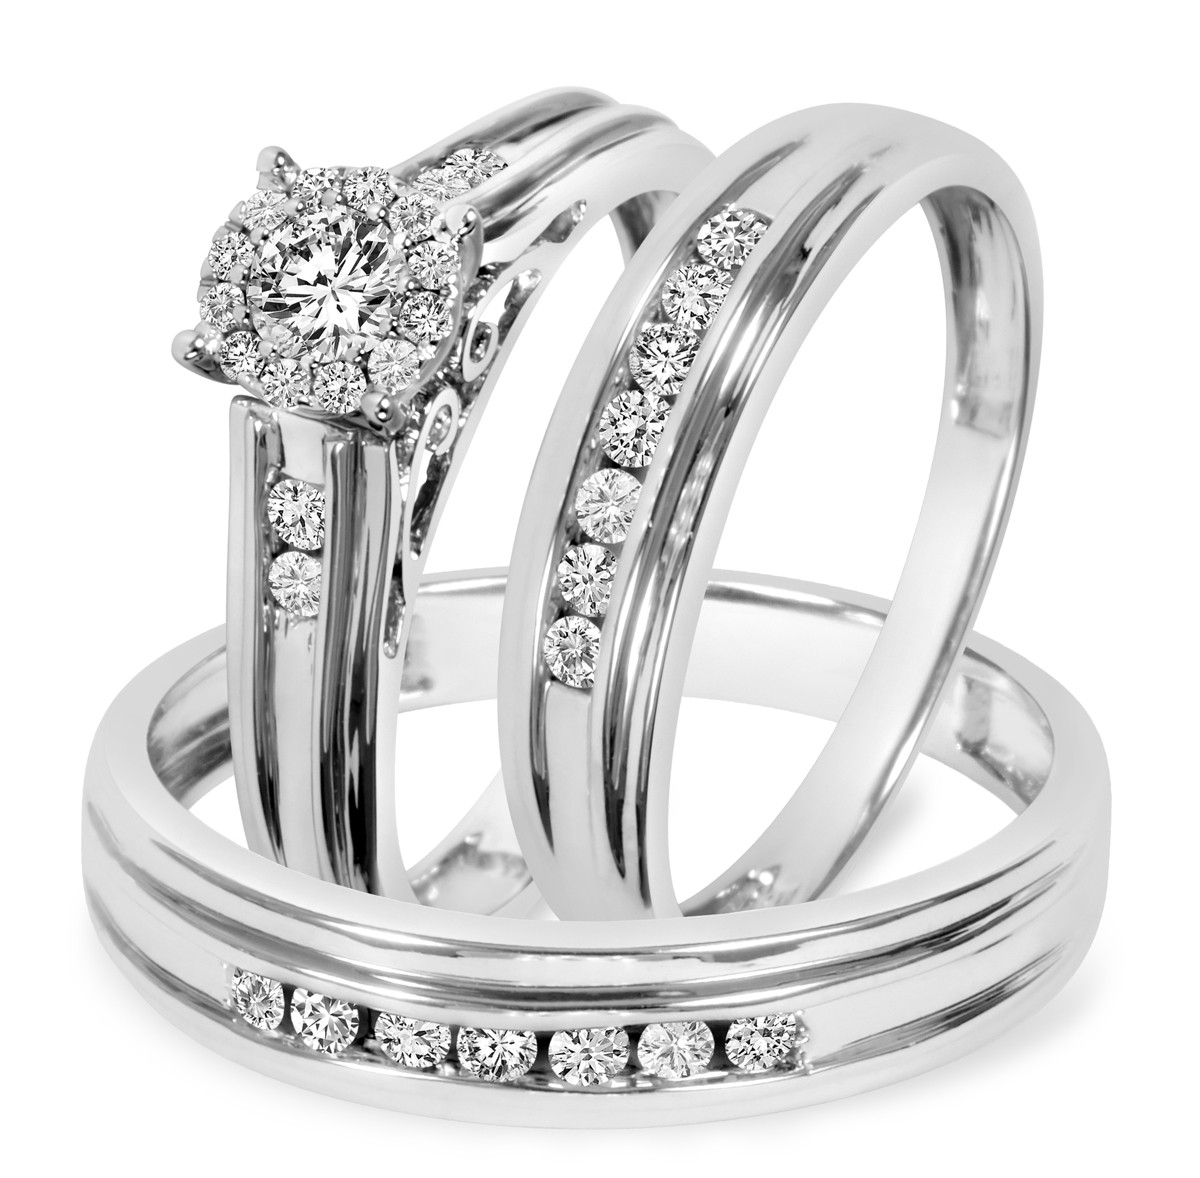 Matching Wedding Ring Sets
 STYLE BT524W10K